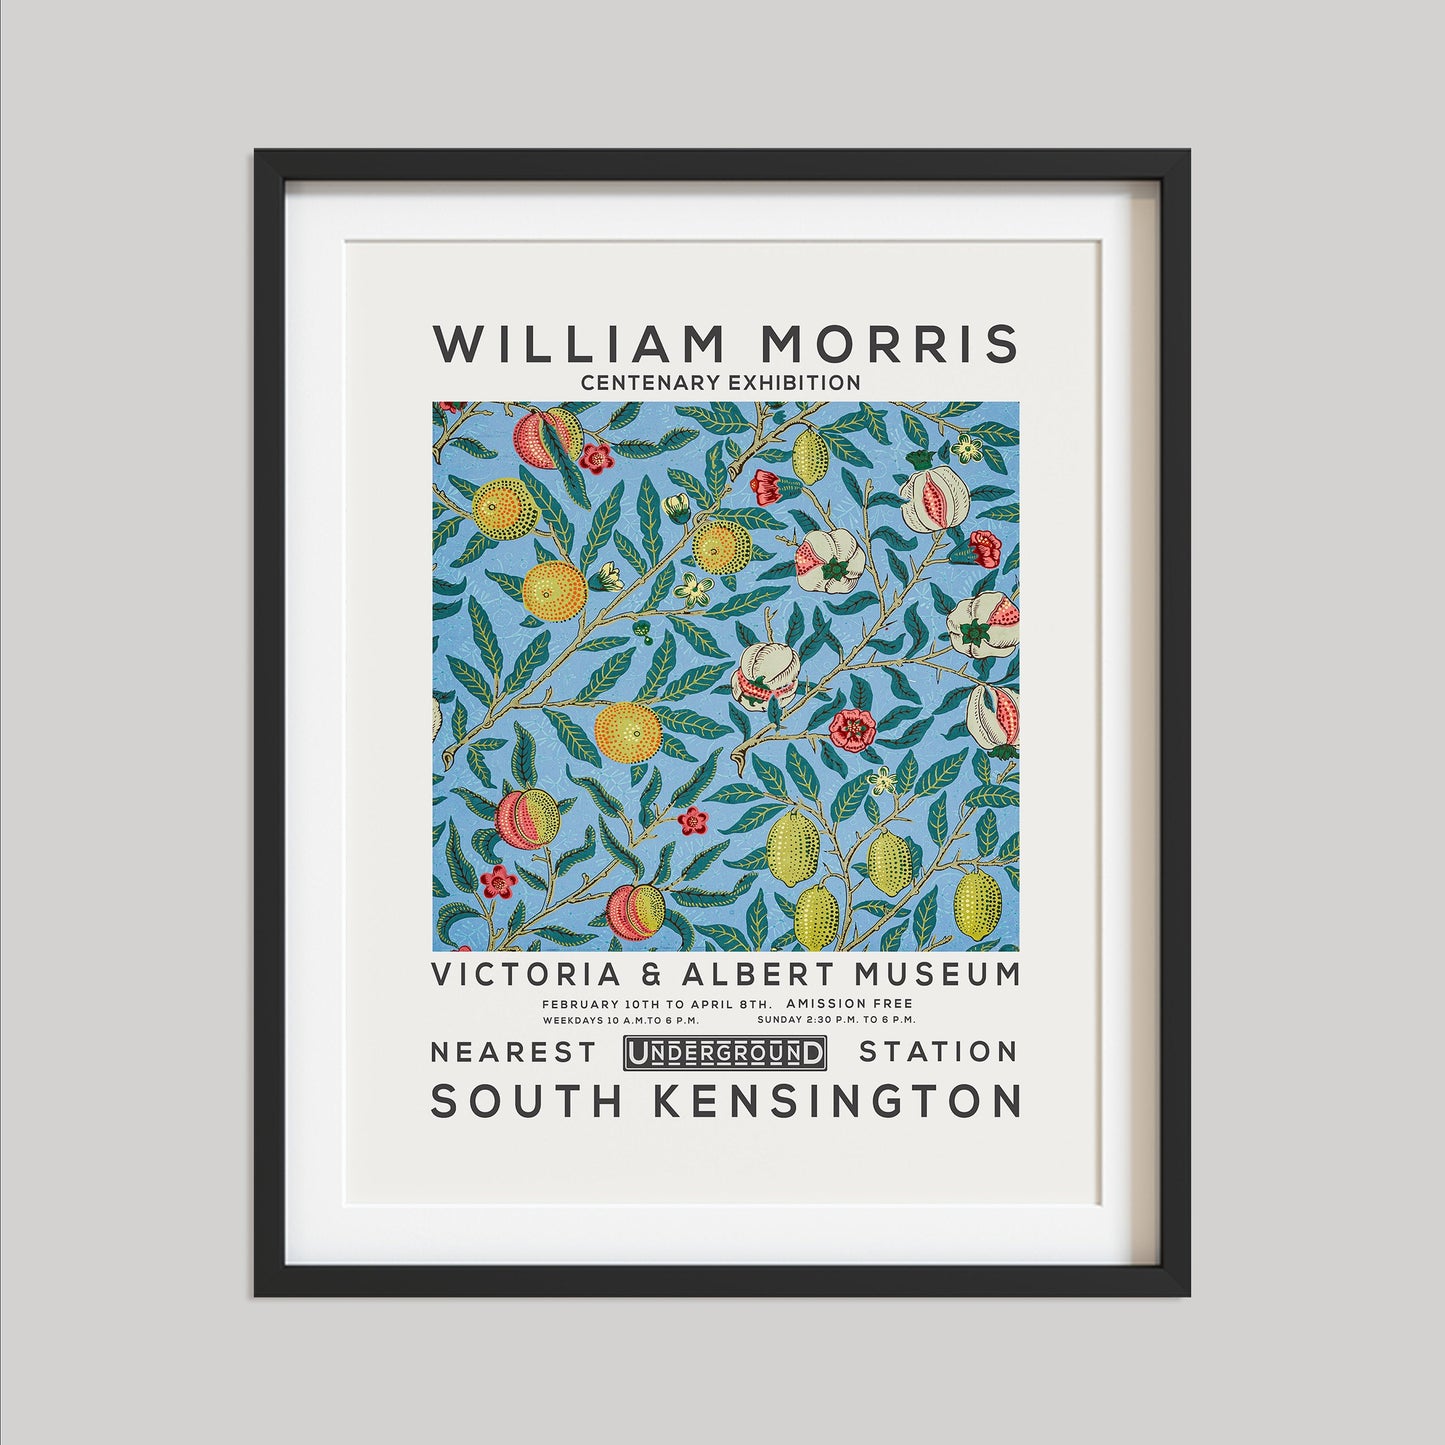 William Morris Print, Vintage Wall Decor, Exhibition Poster, Floral Wall Art, Flower Print, Home Decor, Blue Fruit